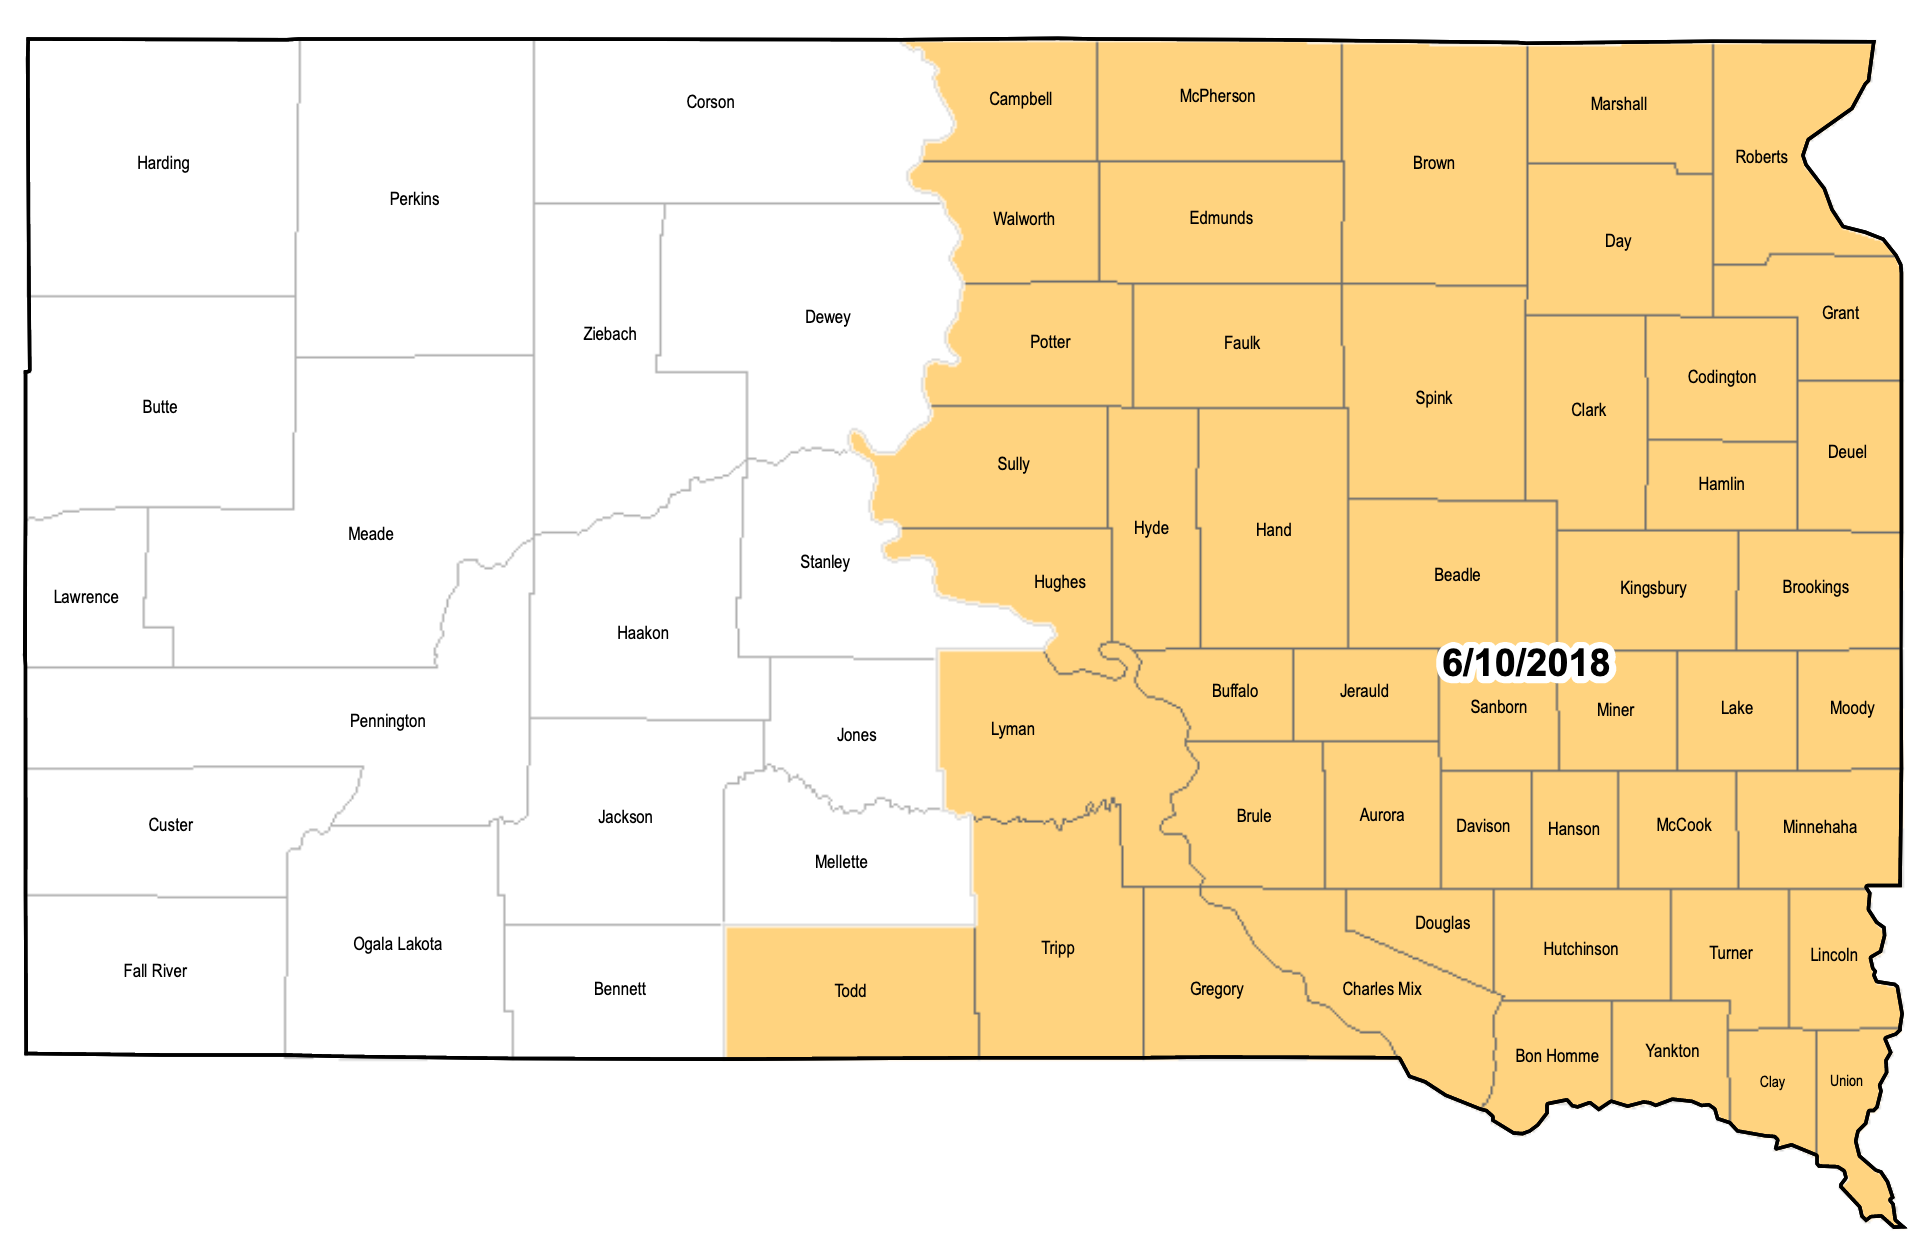 South Dakota soybean late plant date map. View pdf map: https://legacy.rma.usda.gov/fields/mt_rso/2018/final/sdsoybeans.pdf  View text in Excel: https://legacy.rma.usda.gov/fields/mt_rso/2018/final/sdsoybeanstext.xlsx